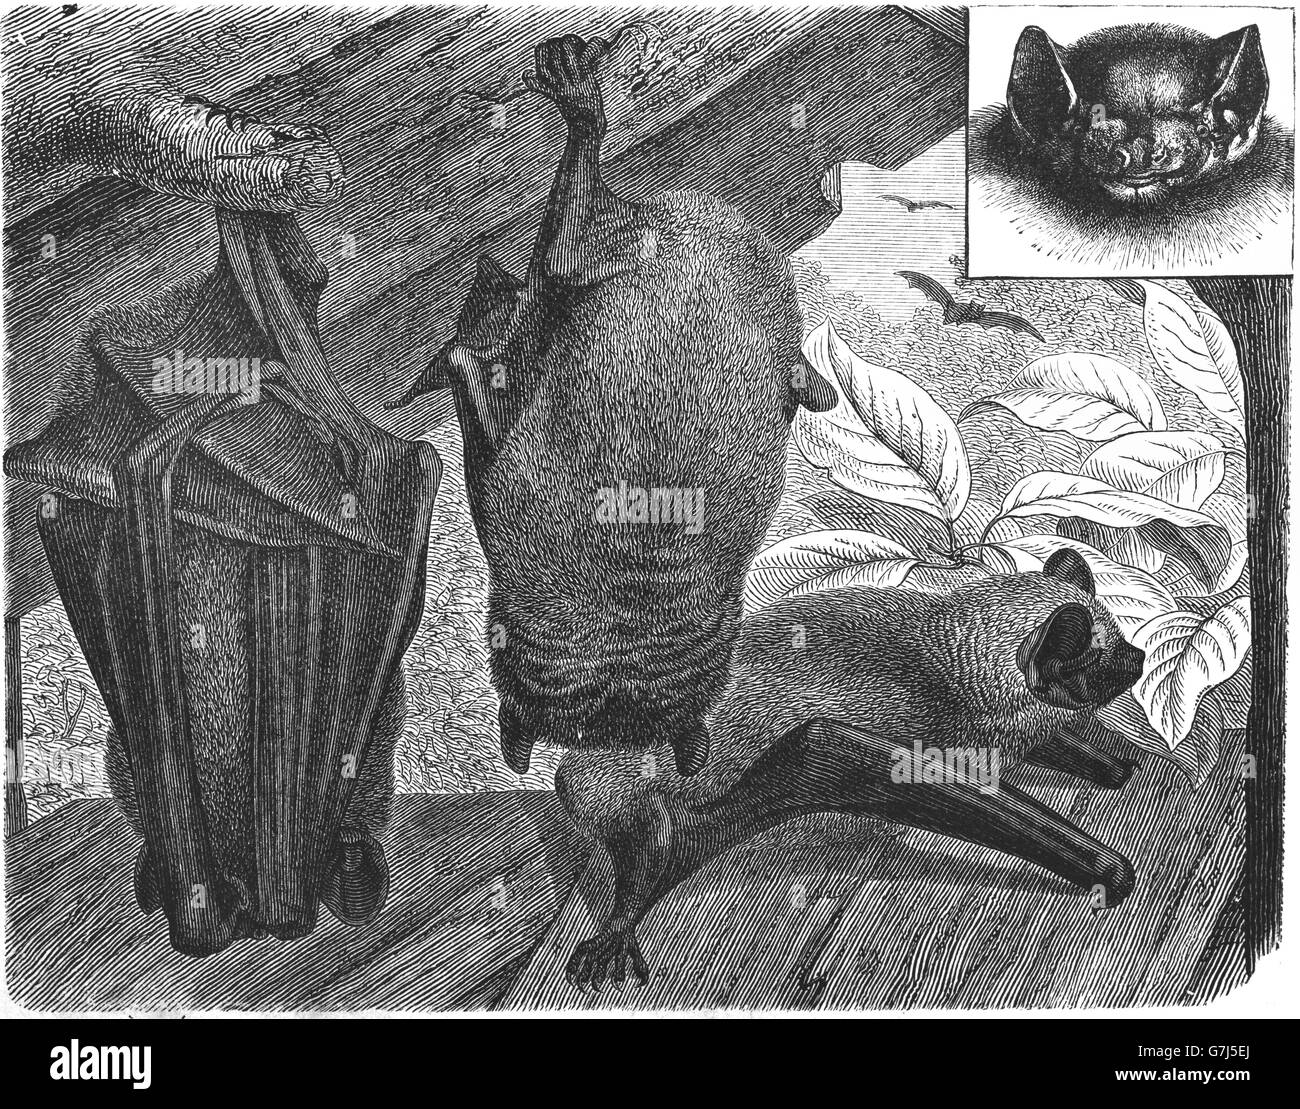 Northern bat, Eptesicus nilssonii, Chiroptera, Vespertilionidae, illustration from book dated 1904 Stock Photo